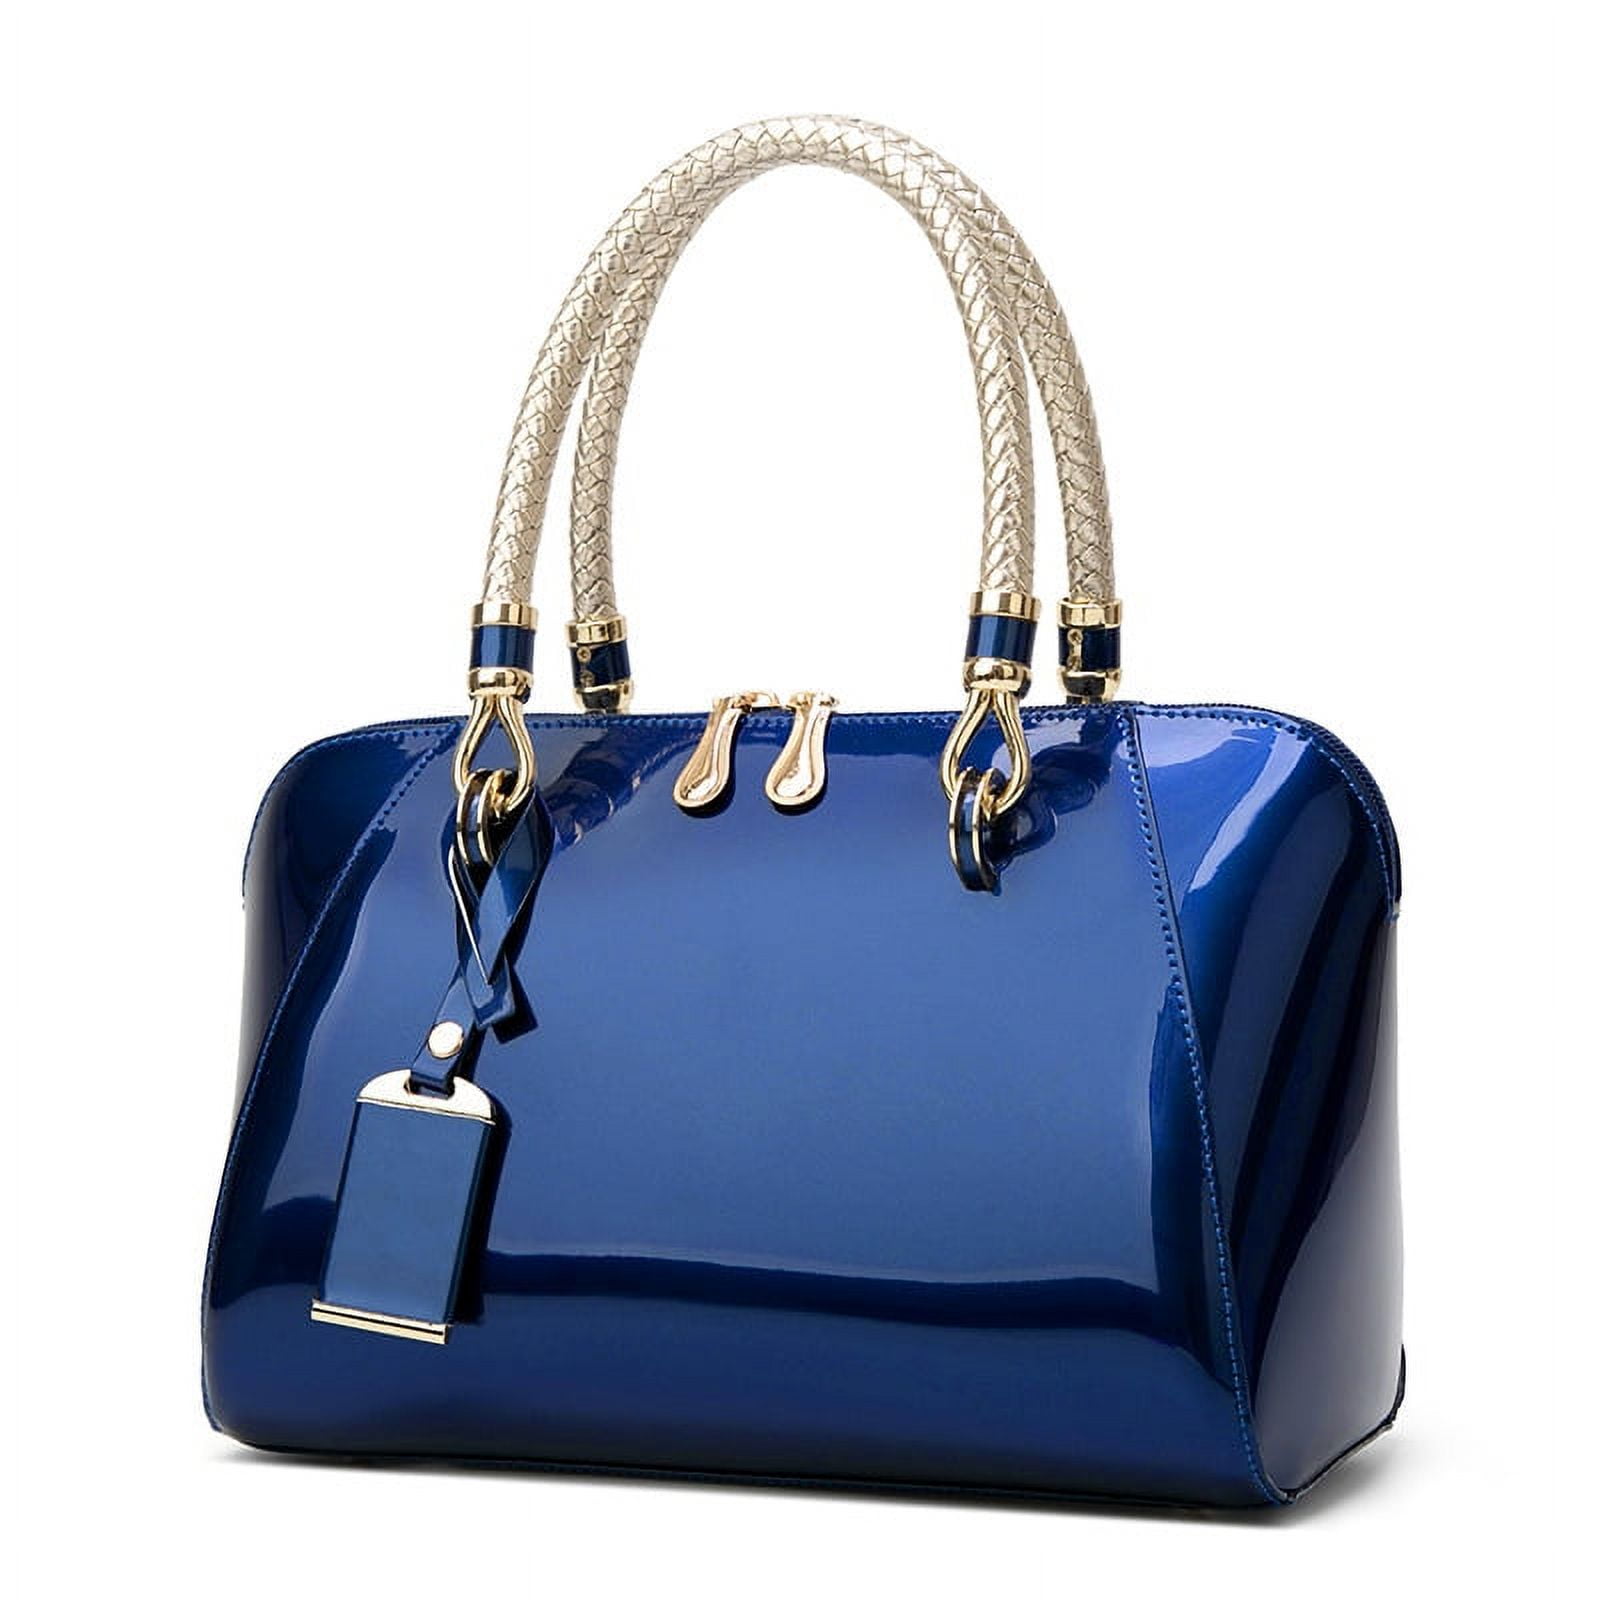 Toyella Patent Leather Handbags Shiny Handbag Fashion One shoulder Diagonal Bag Blue 99e6f956 e9c6 4e68 b167 137d51ae4b8b.b6a998872df96c1972d1cafdf8d9d16d